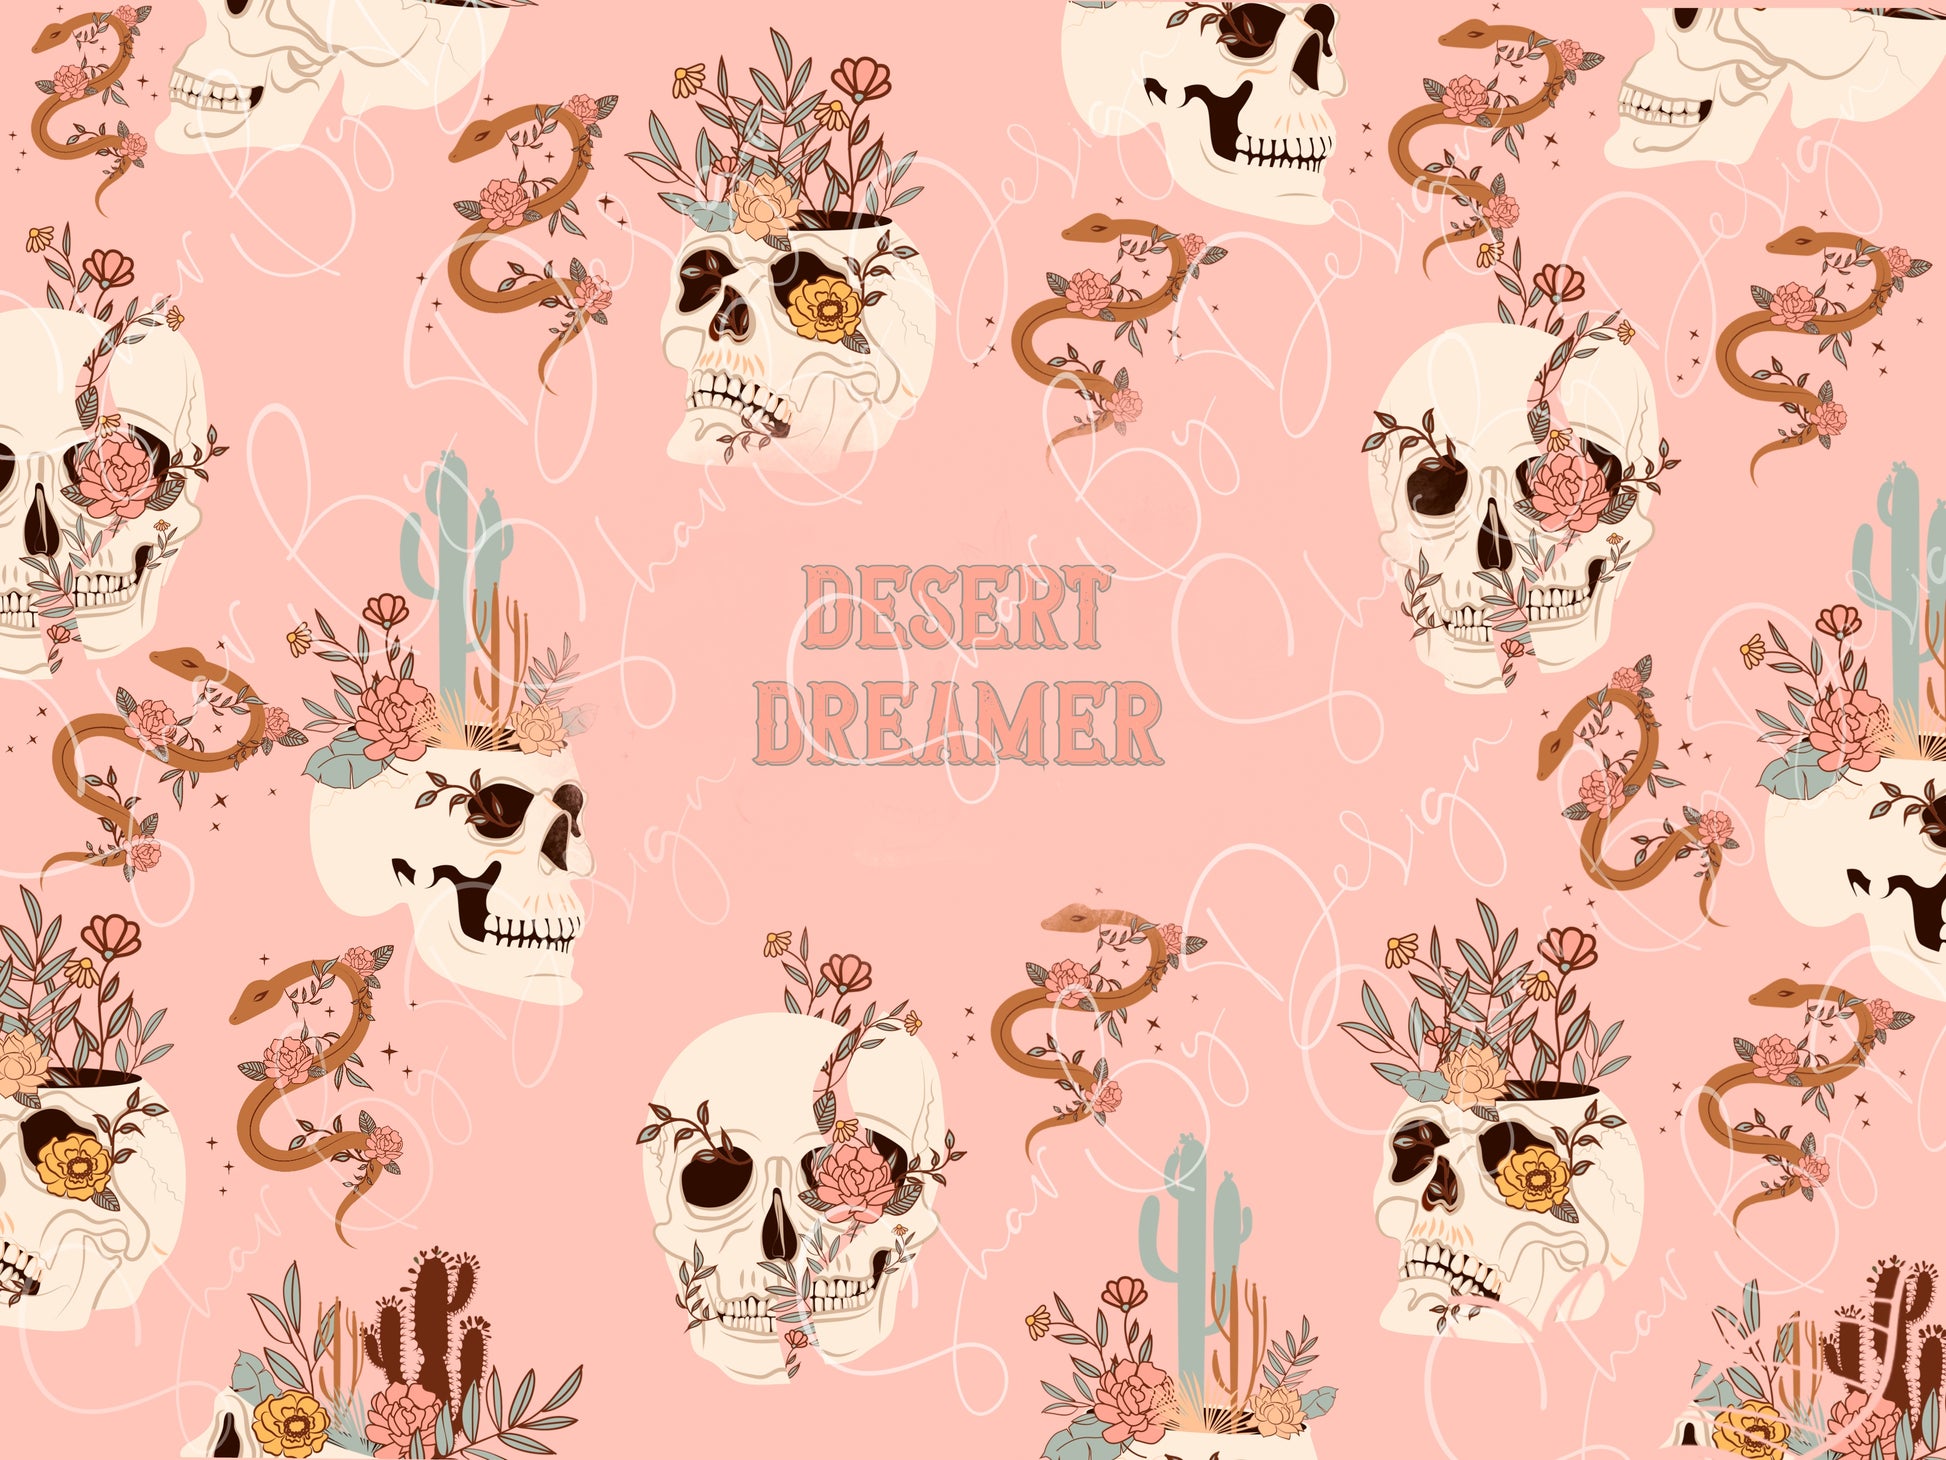 floral skull tumblr background